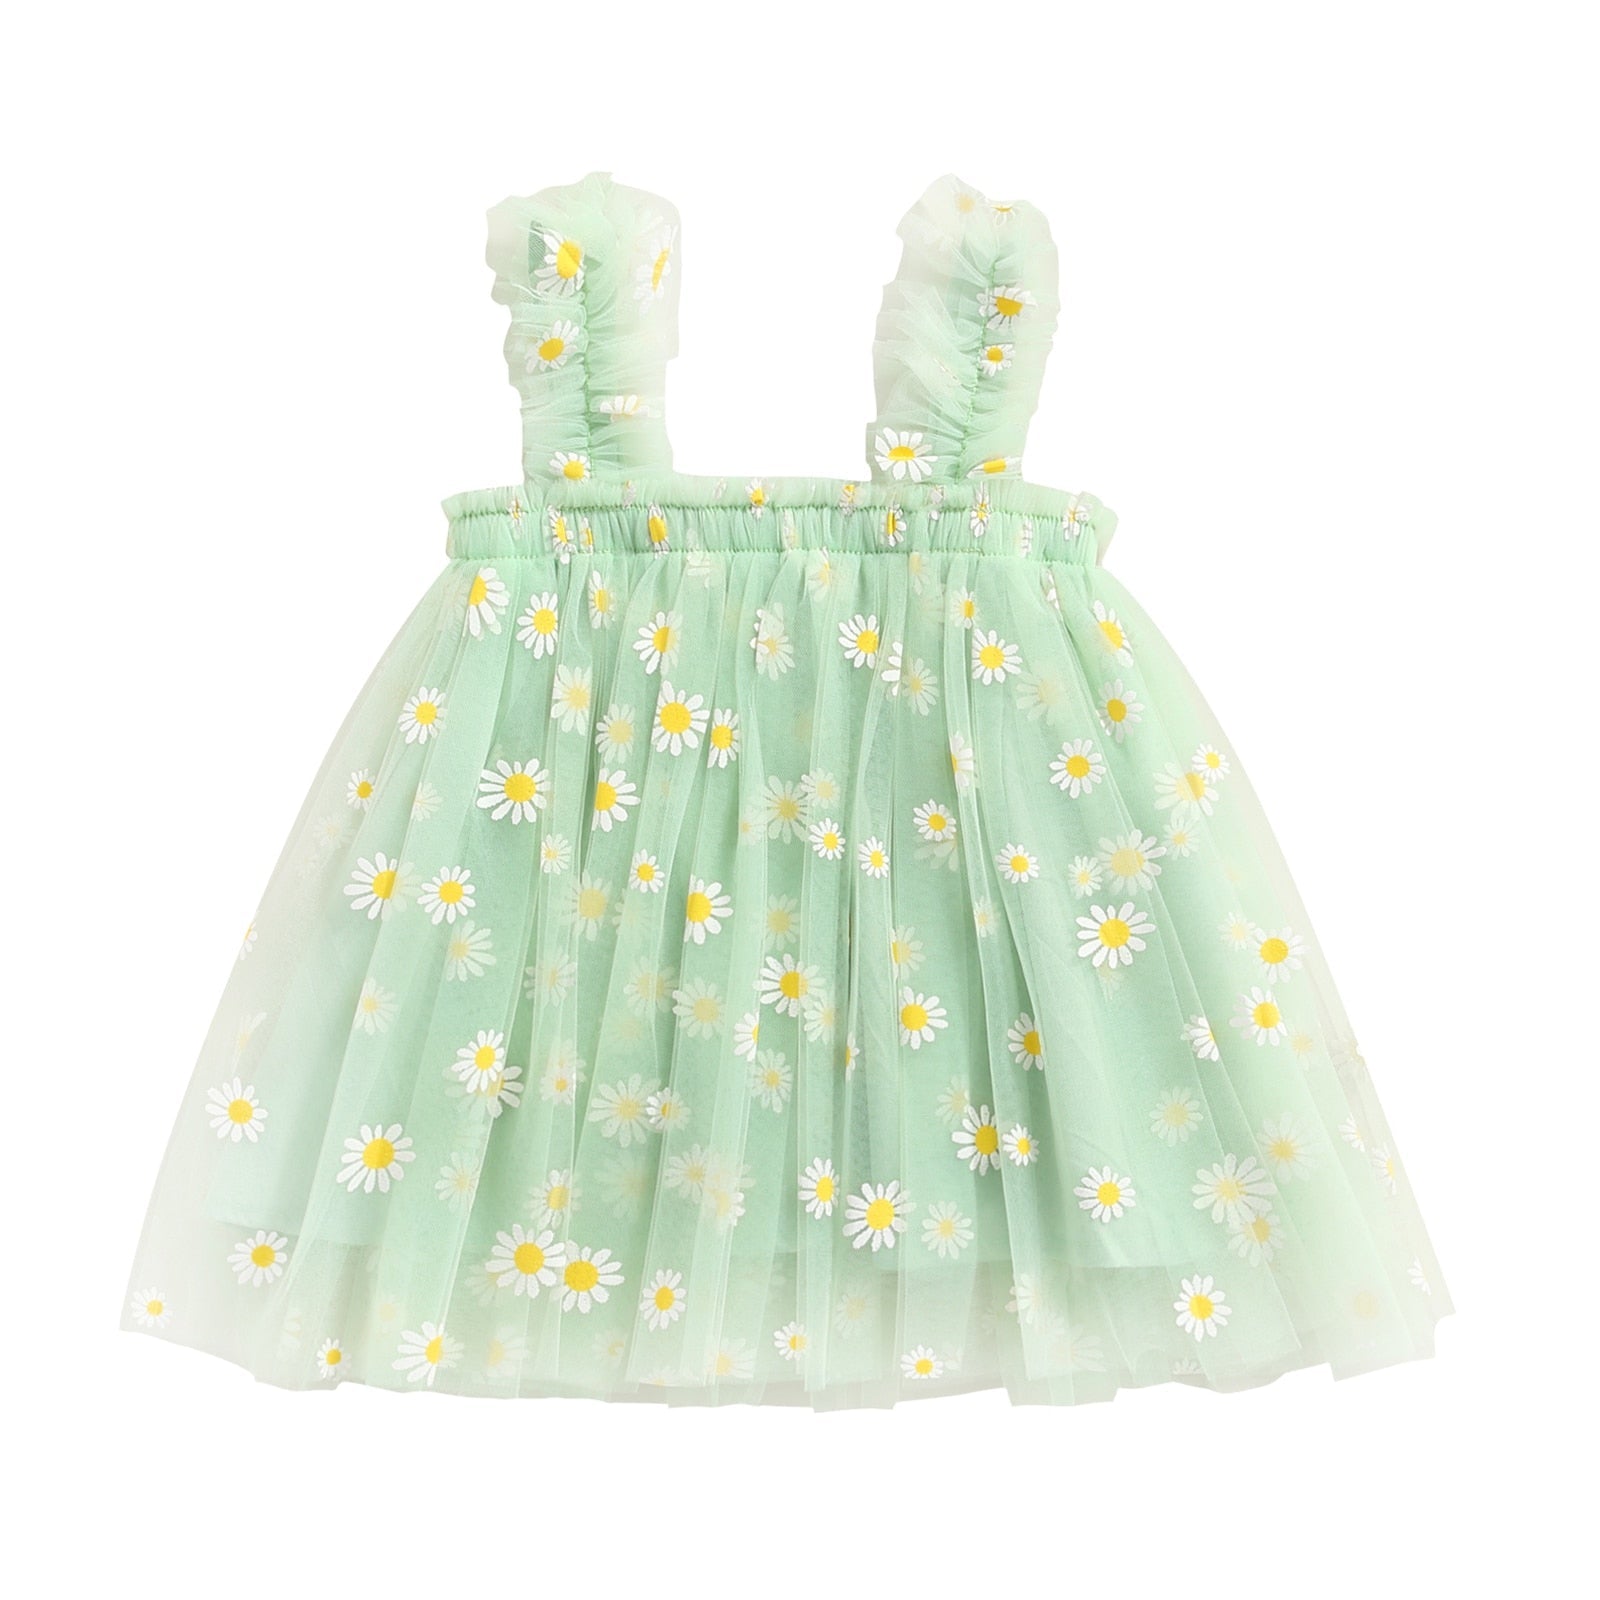 Vestido Infantil Tule Estampas vestido Loja Click Certo Verde 2-3 anos 48cm 